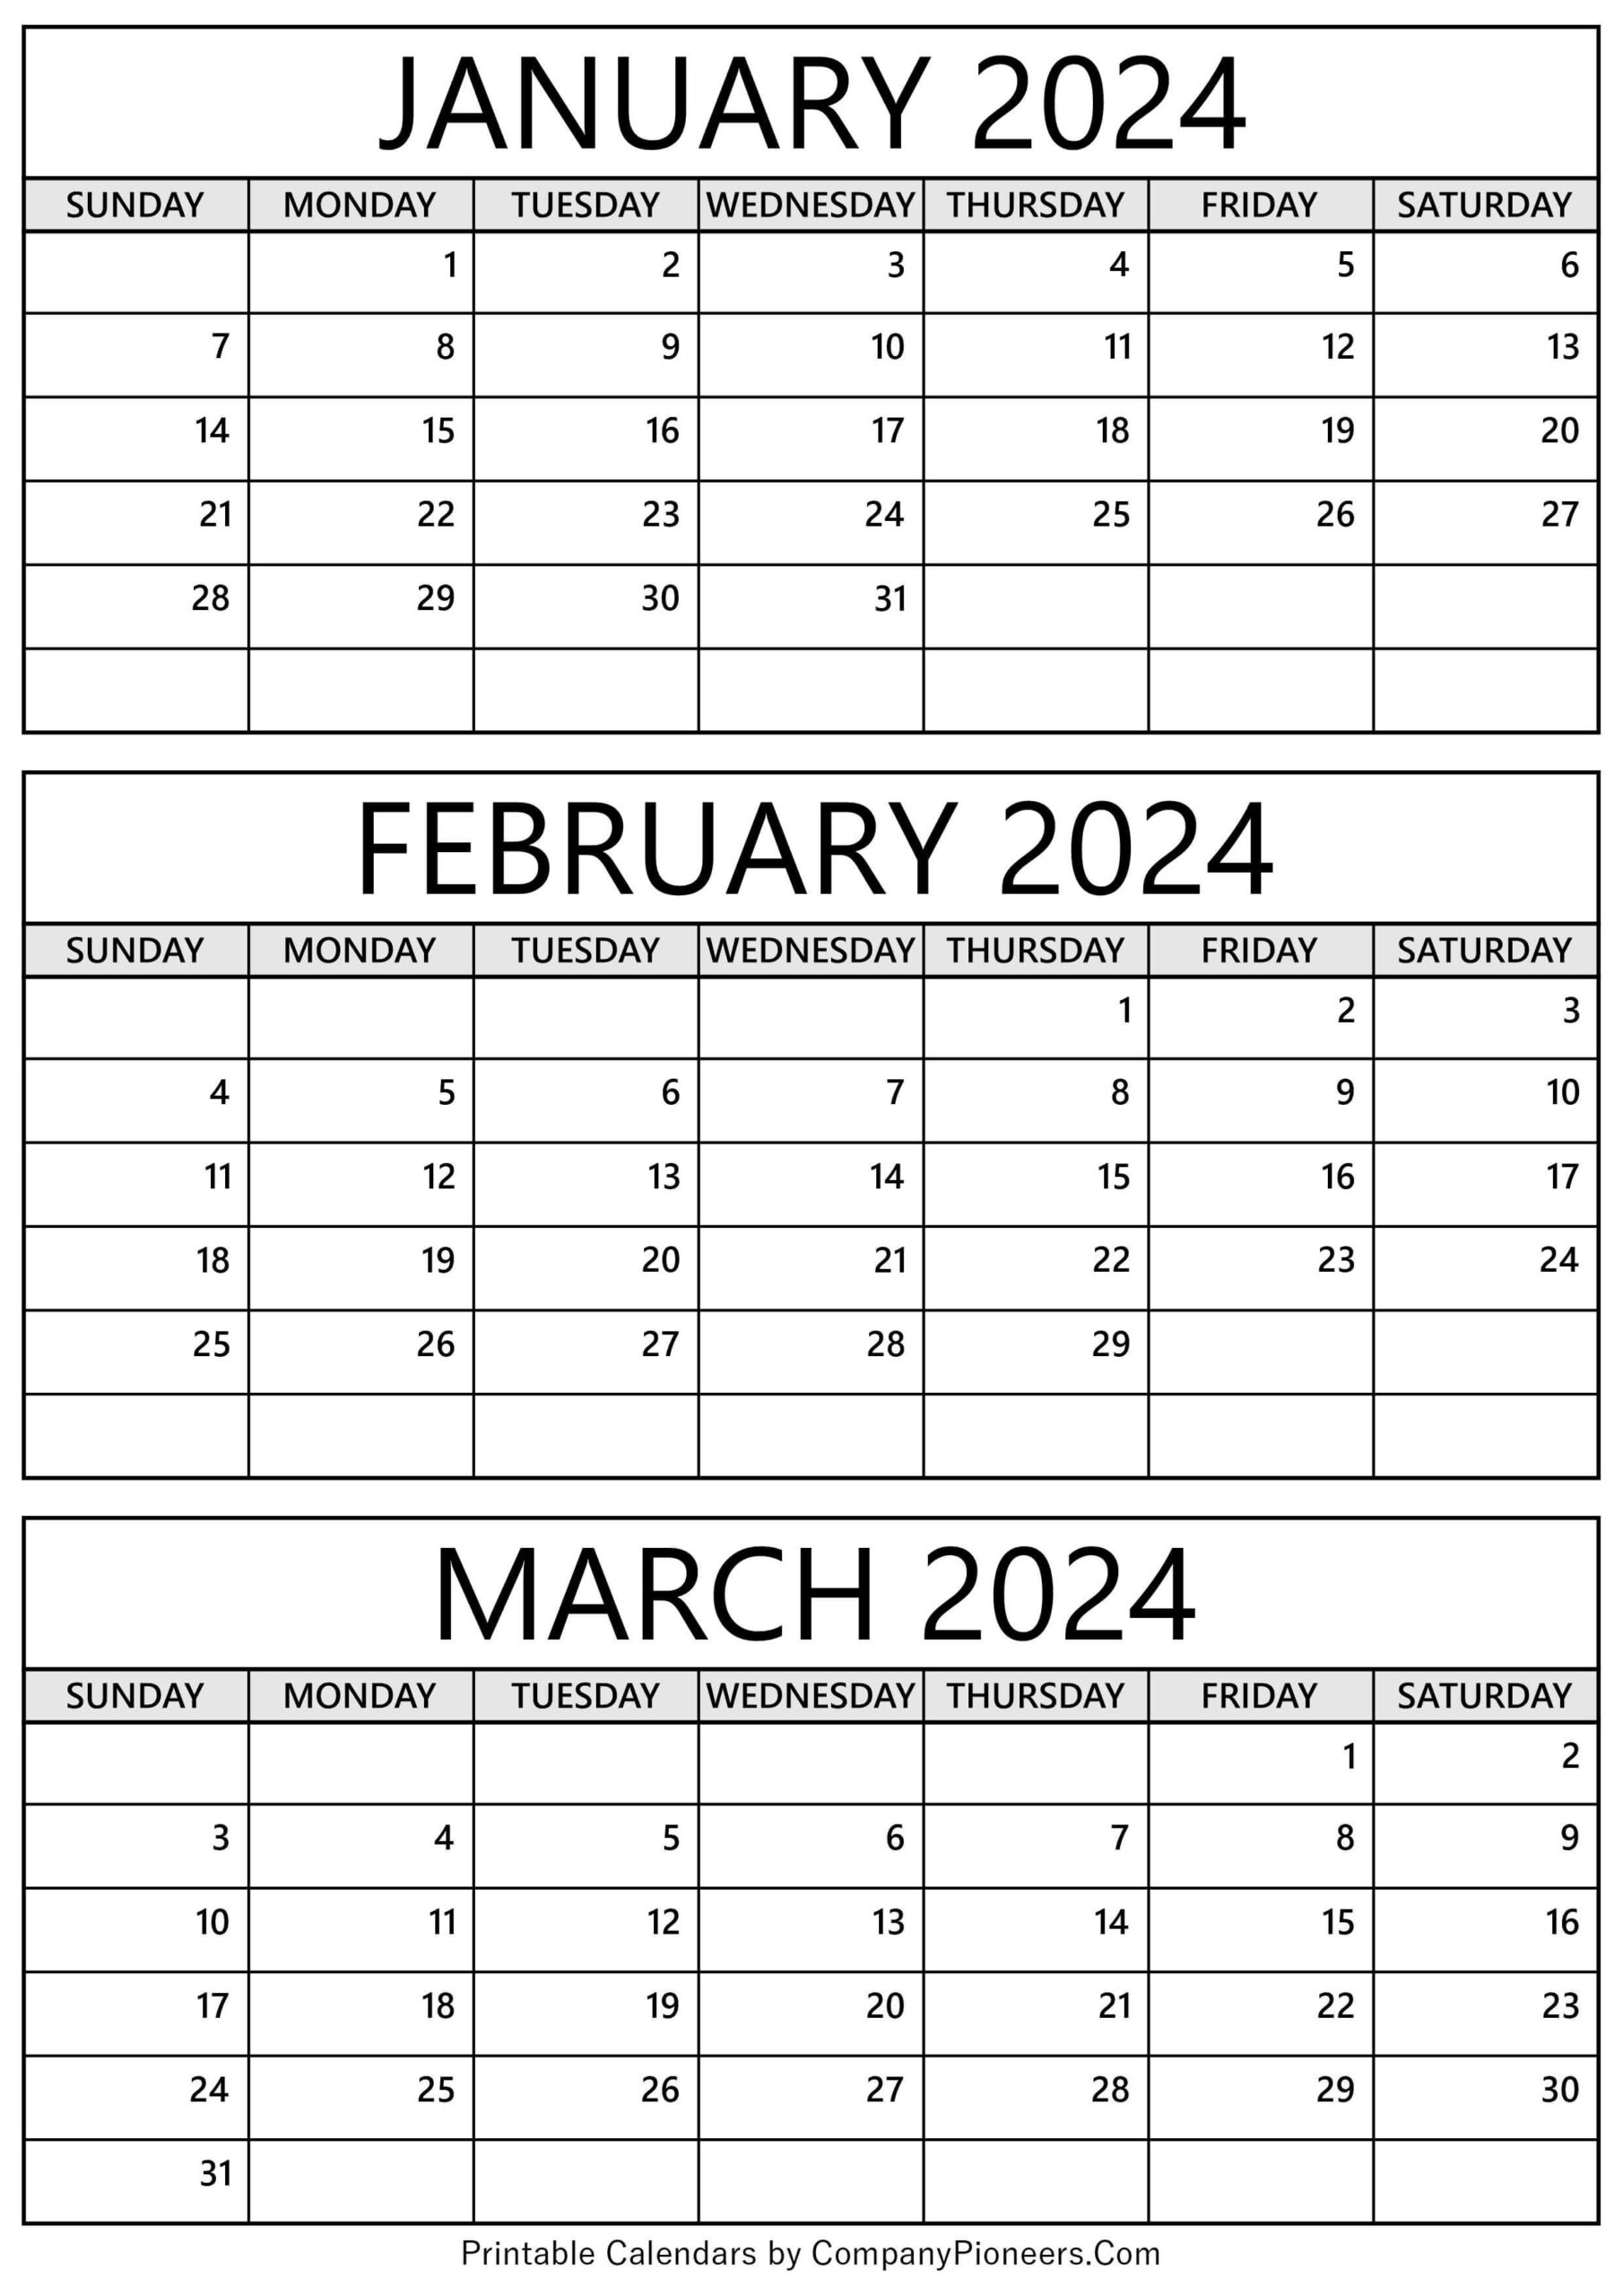 January February March 2024 Calendar Printable - Template | Printable Calendar 2024 January And February